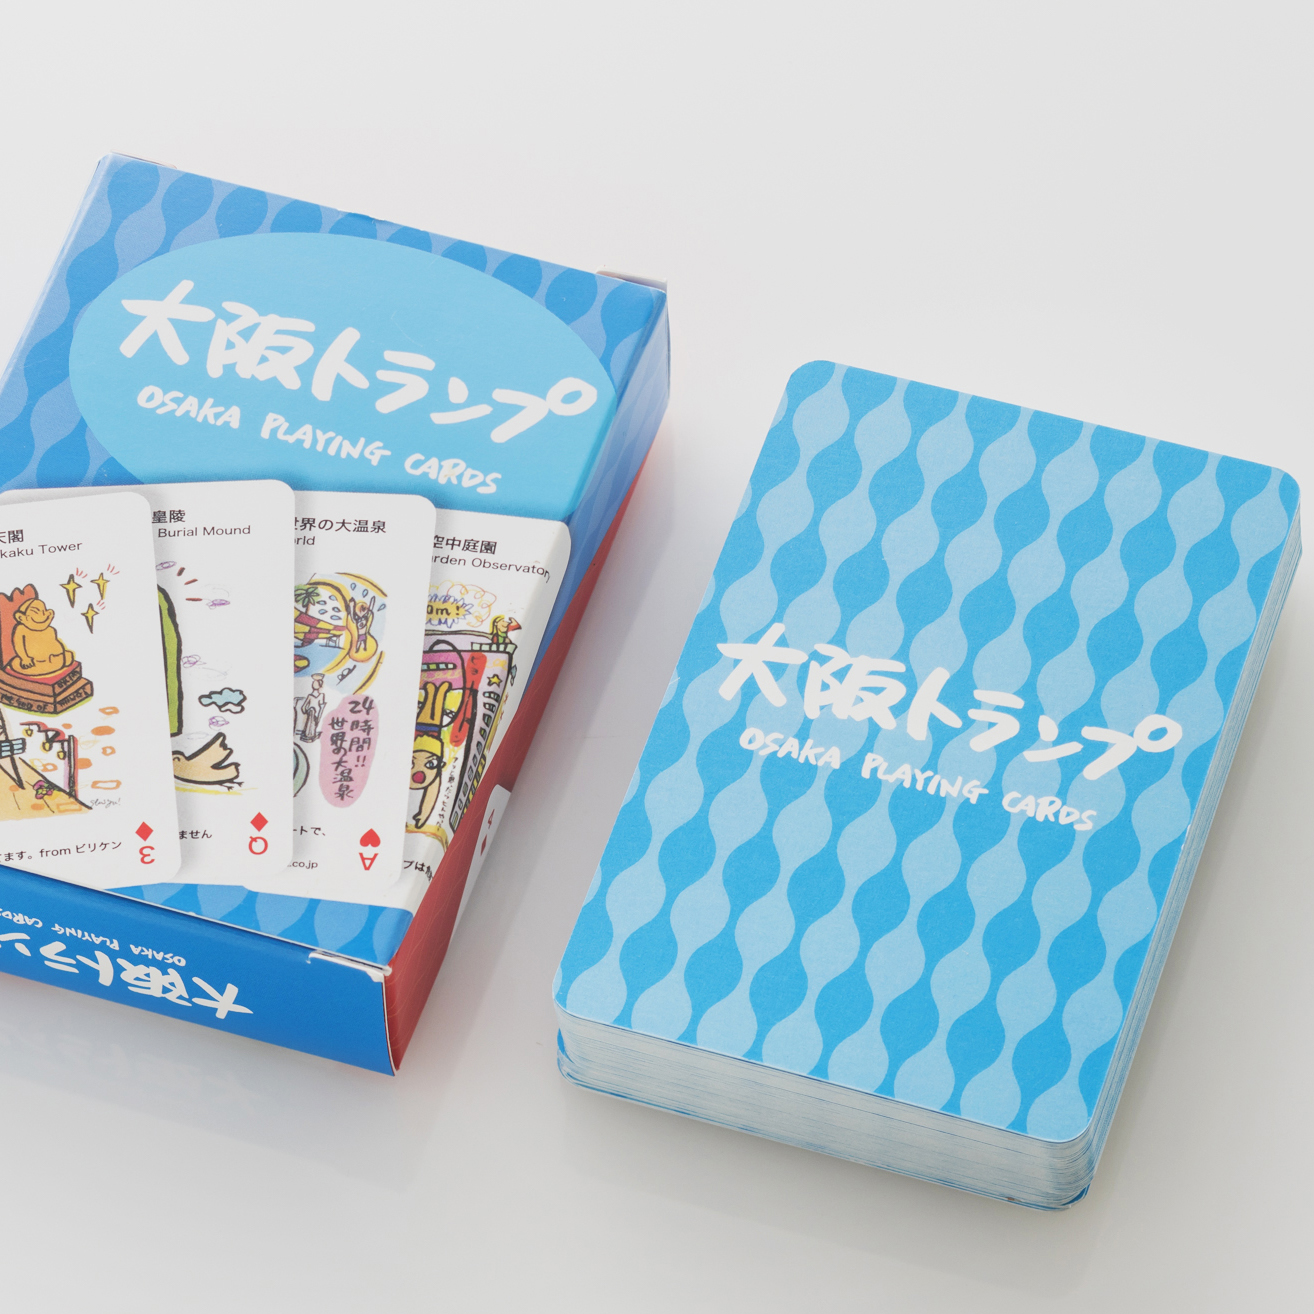 Osaka trump(Playing cards)Standard Edition